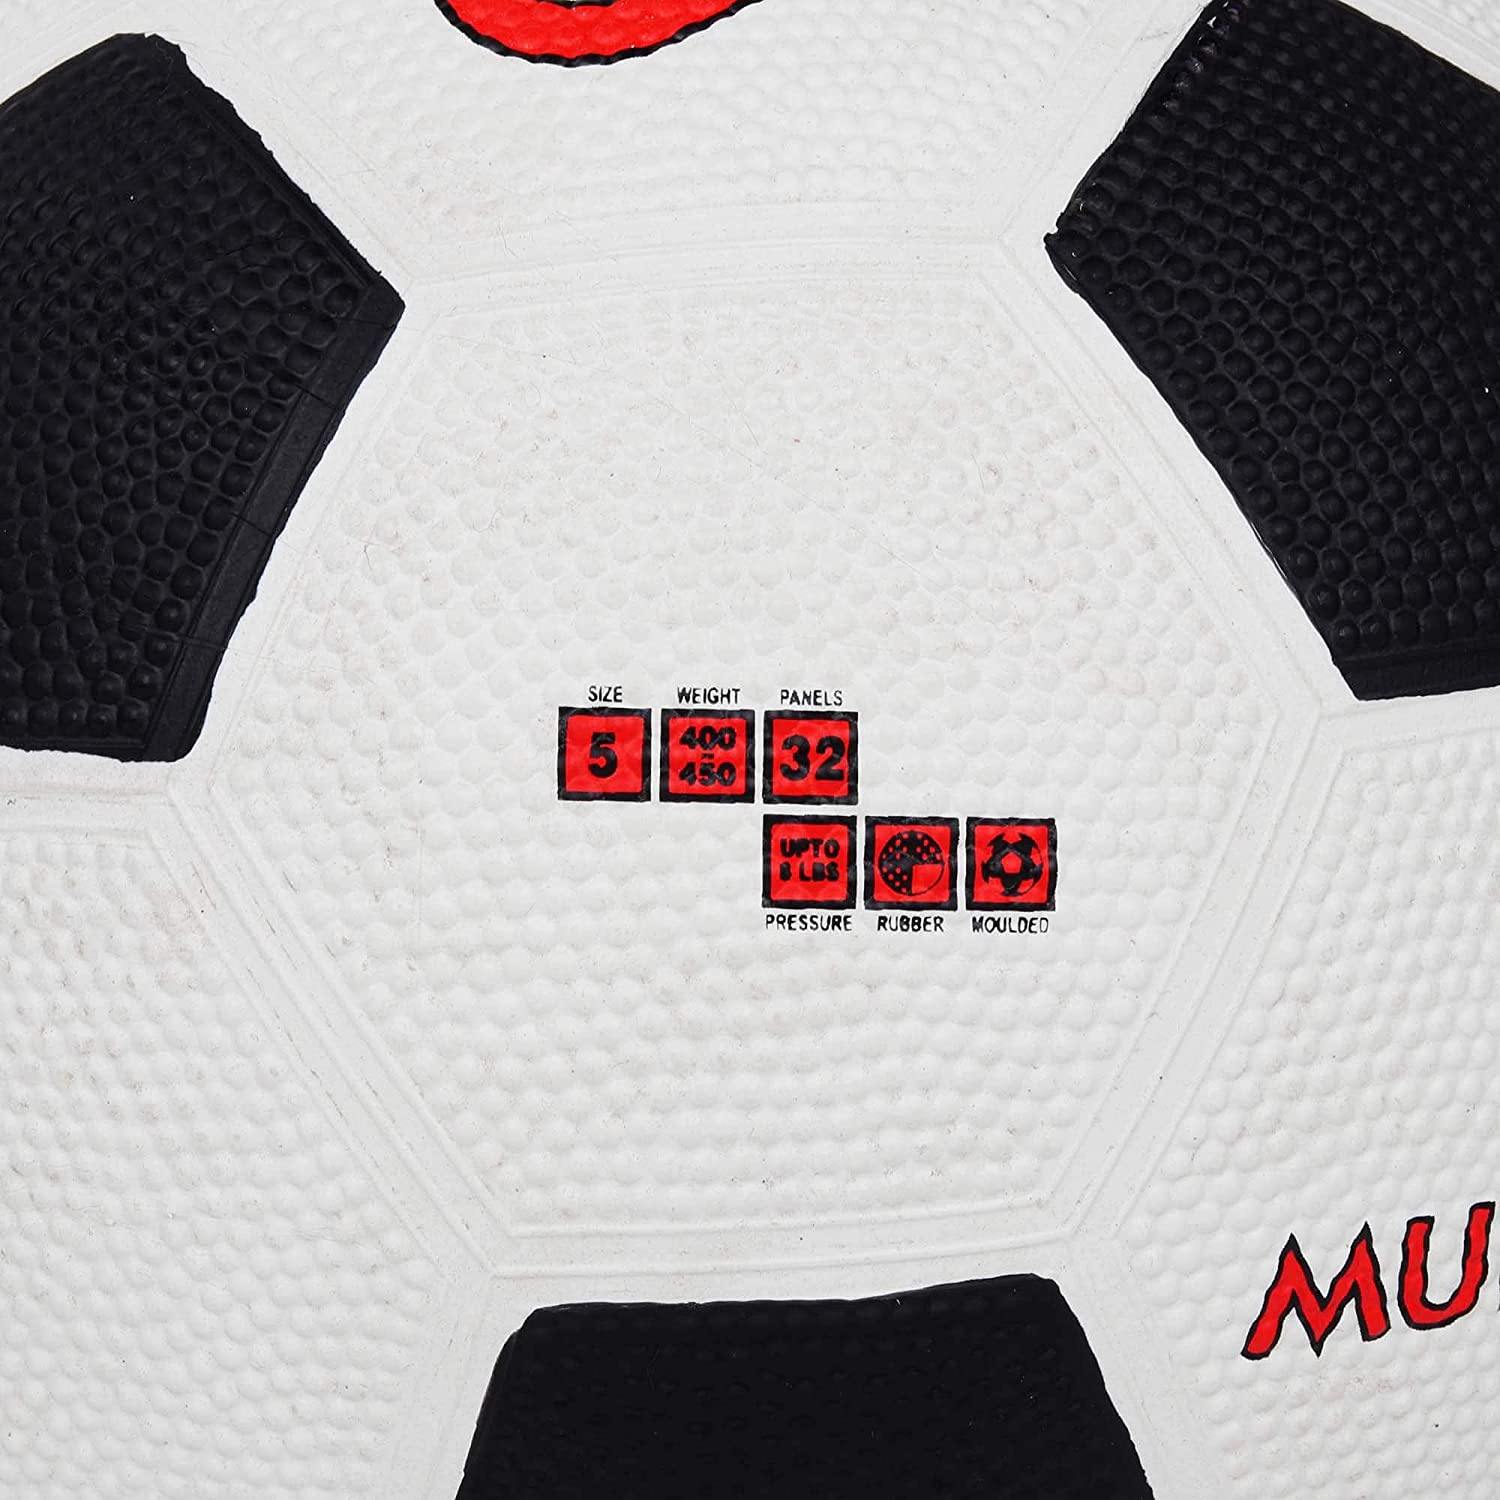 Cosco 14013 Mundial Foot Ball, Size 5 (White/Black) - Best Price online Prokicksports.com